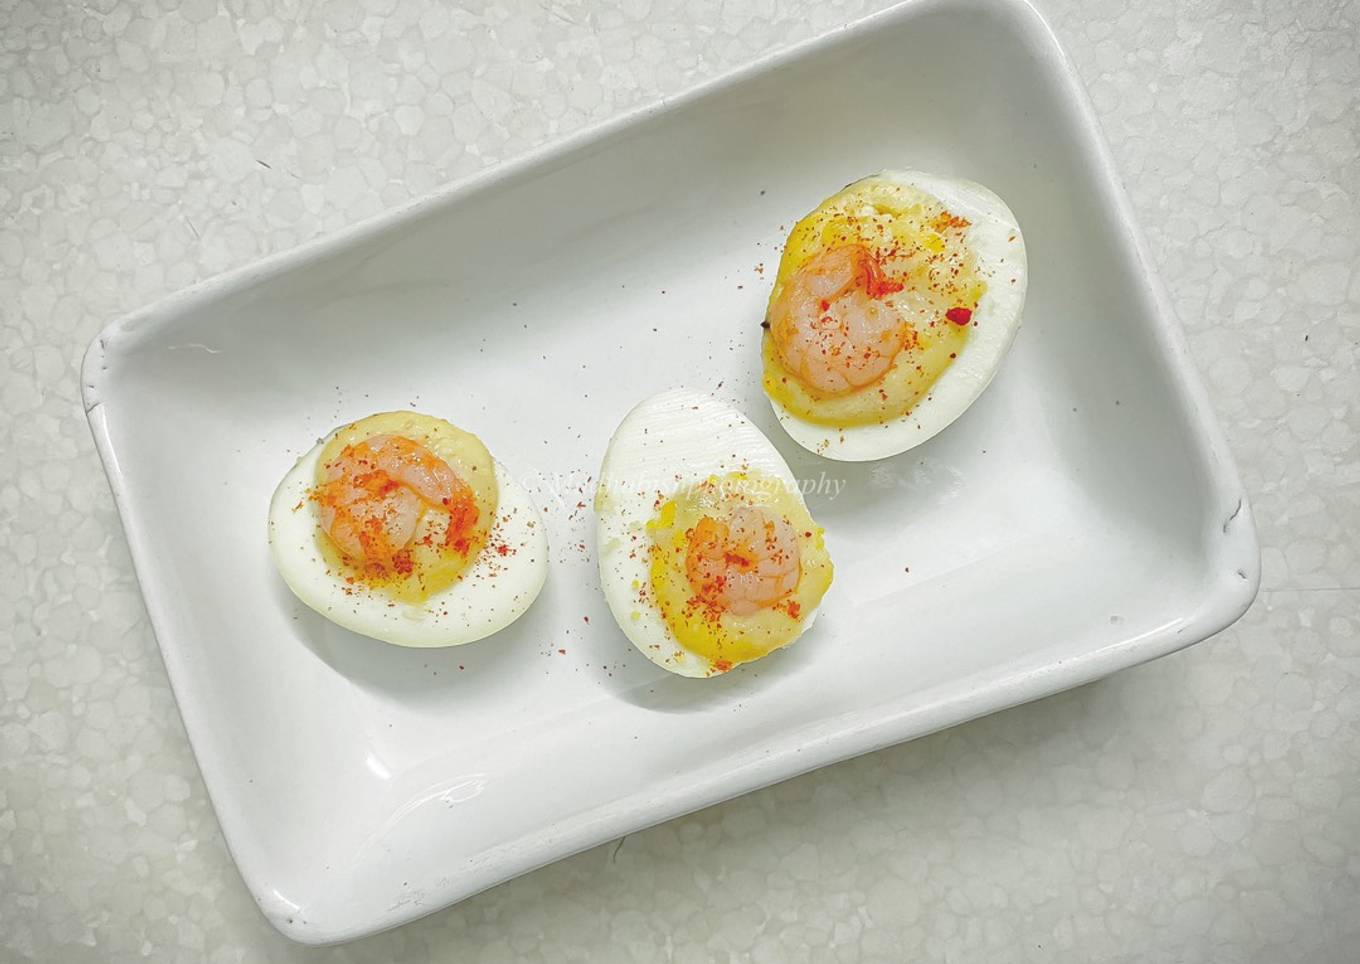 Shrimp with mayonnaise on devilish eggs